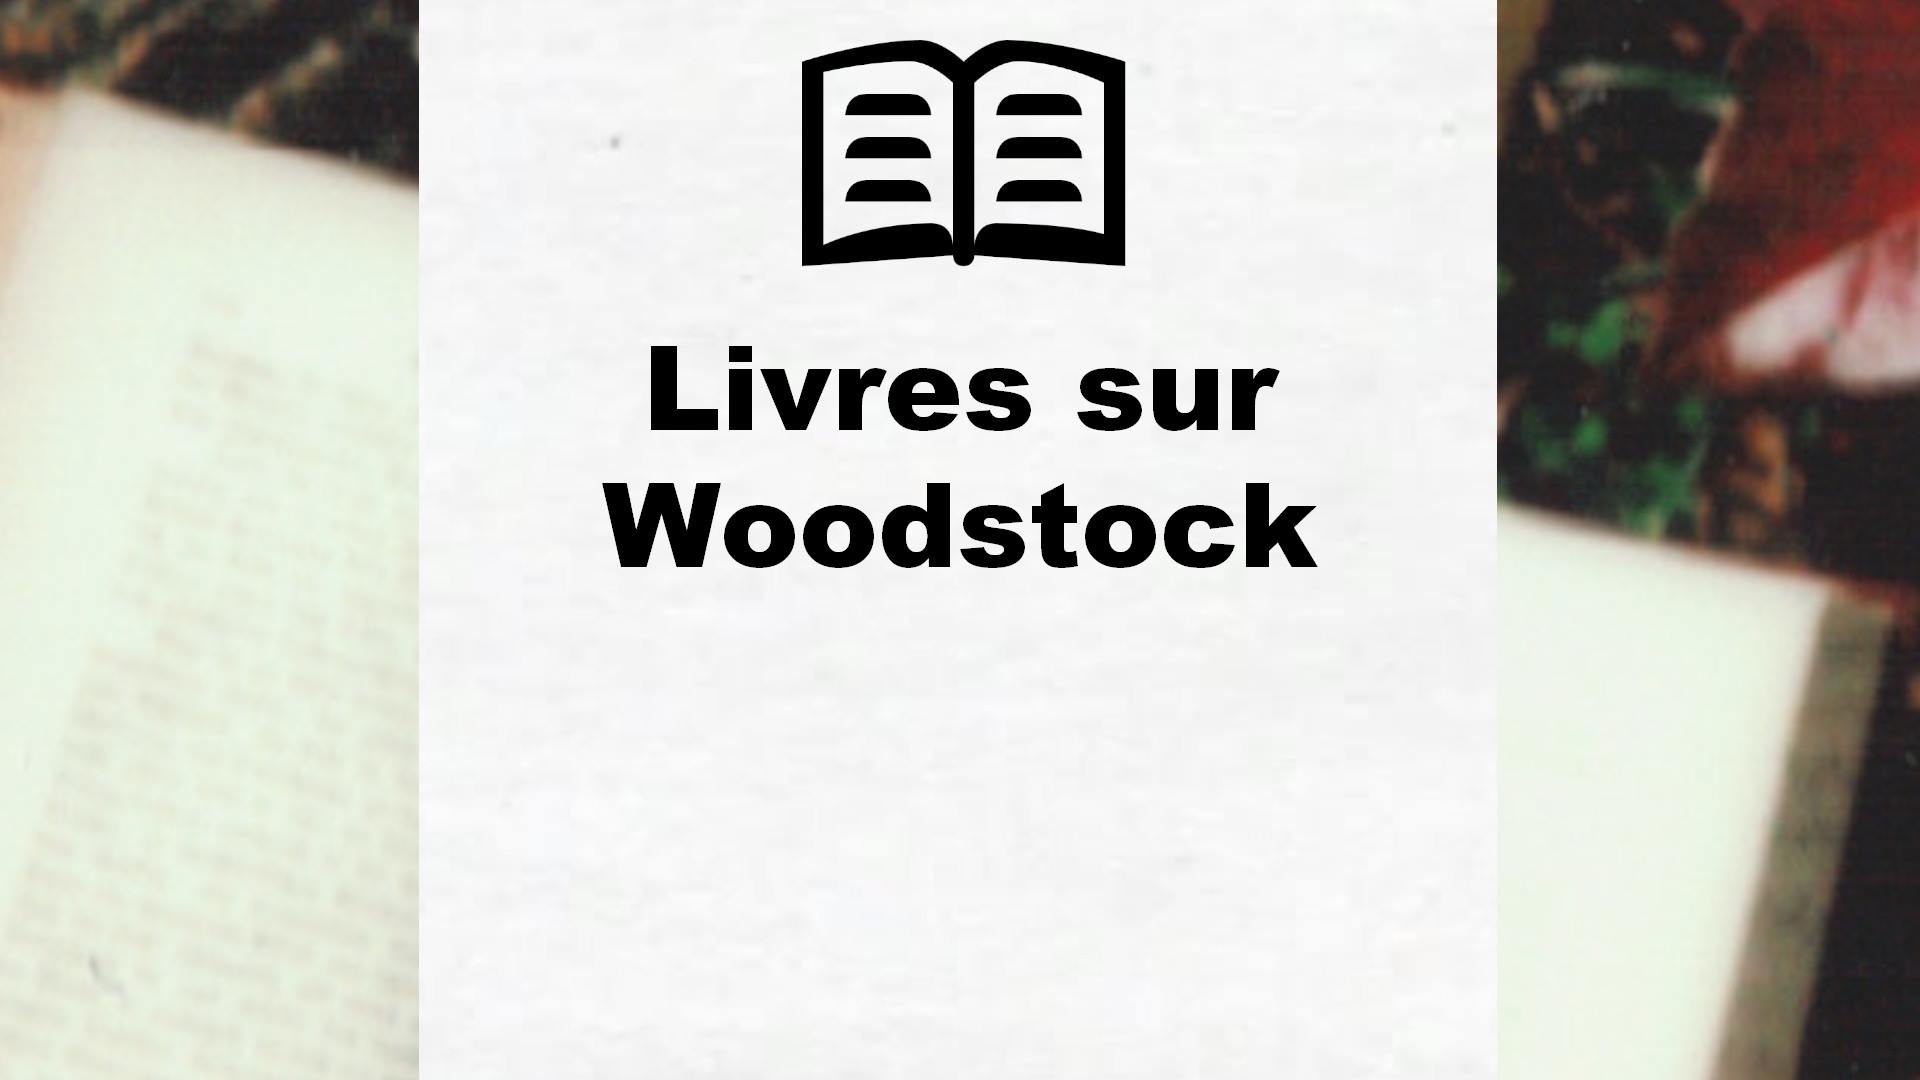 Livres sur Woodstock